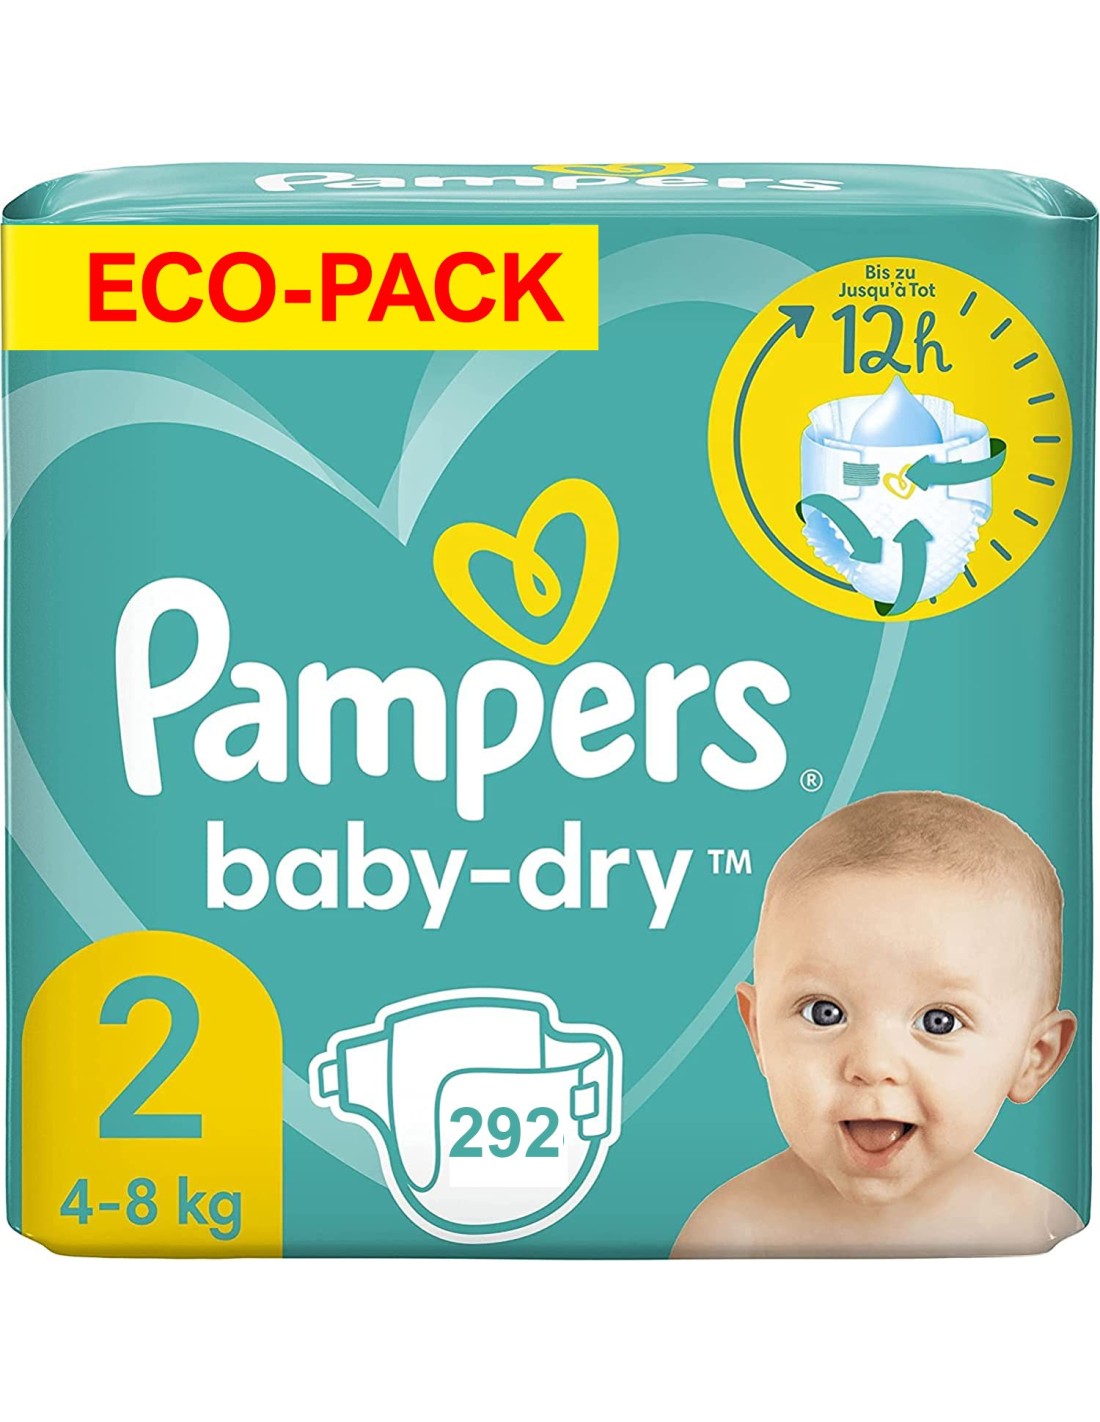 Pampers Baby-Dry Pants Taille 6, paquet économique